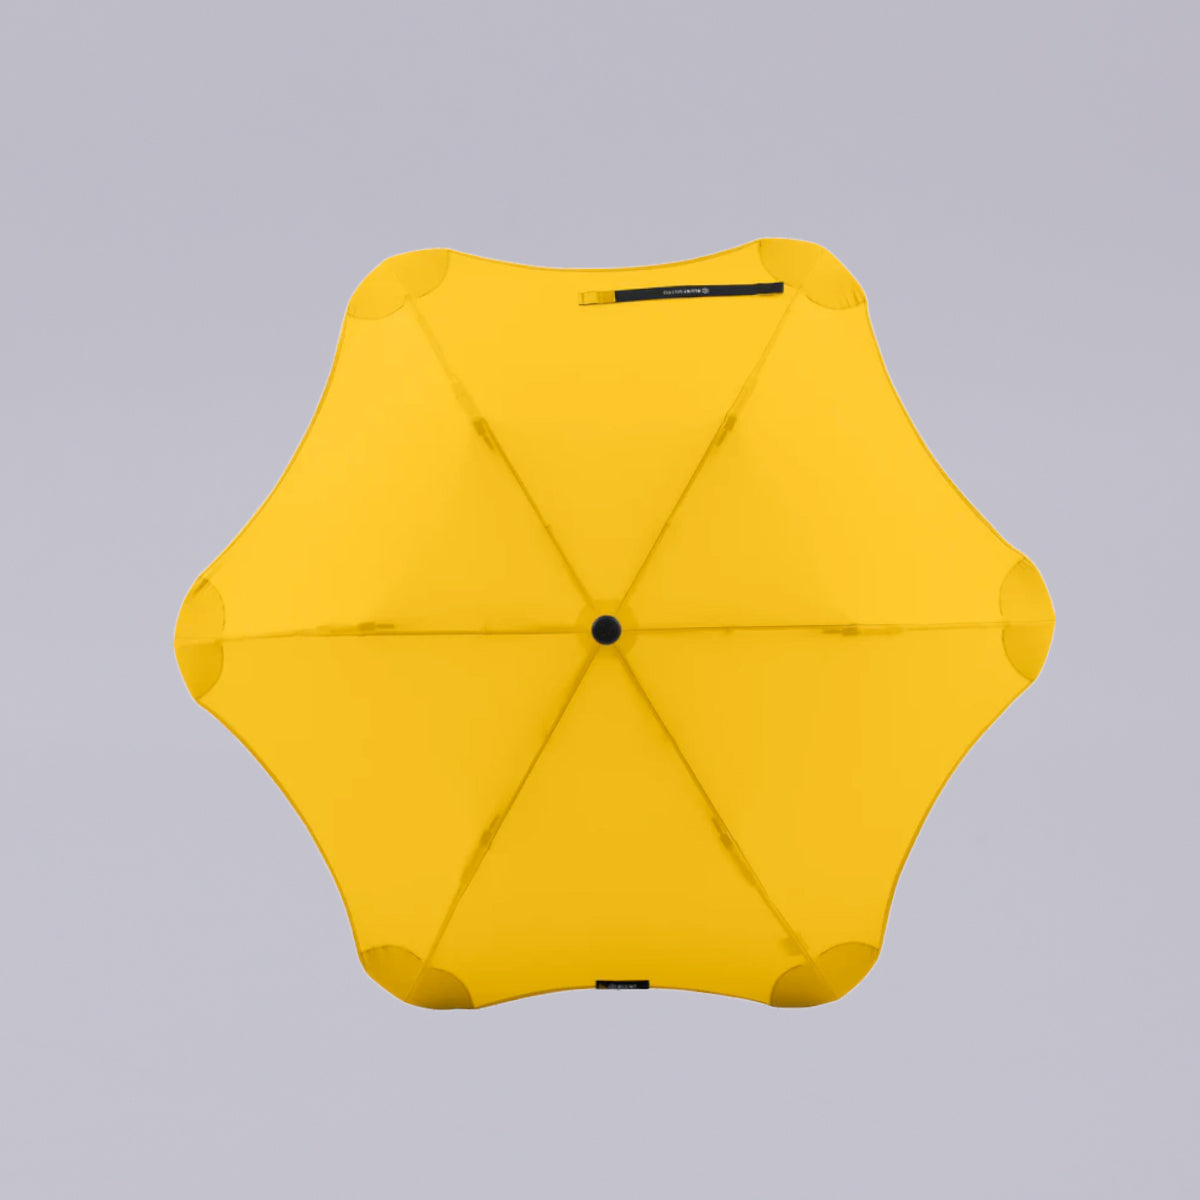 Blunt | Umbrella | Metro 2.0 | Yellow